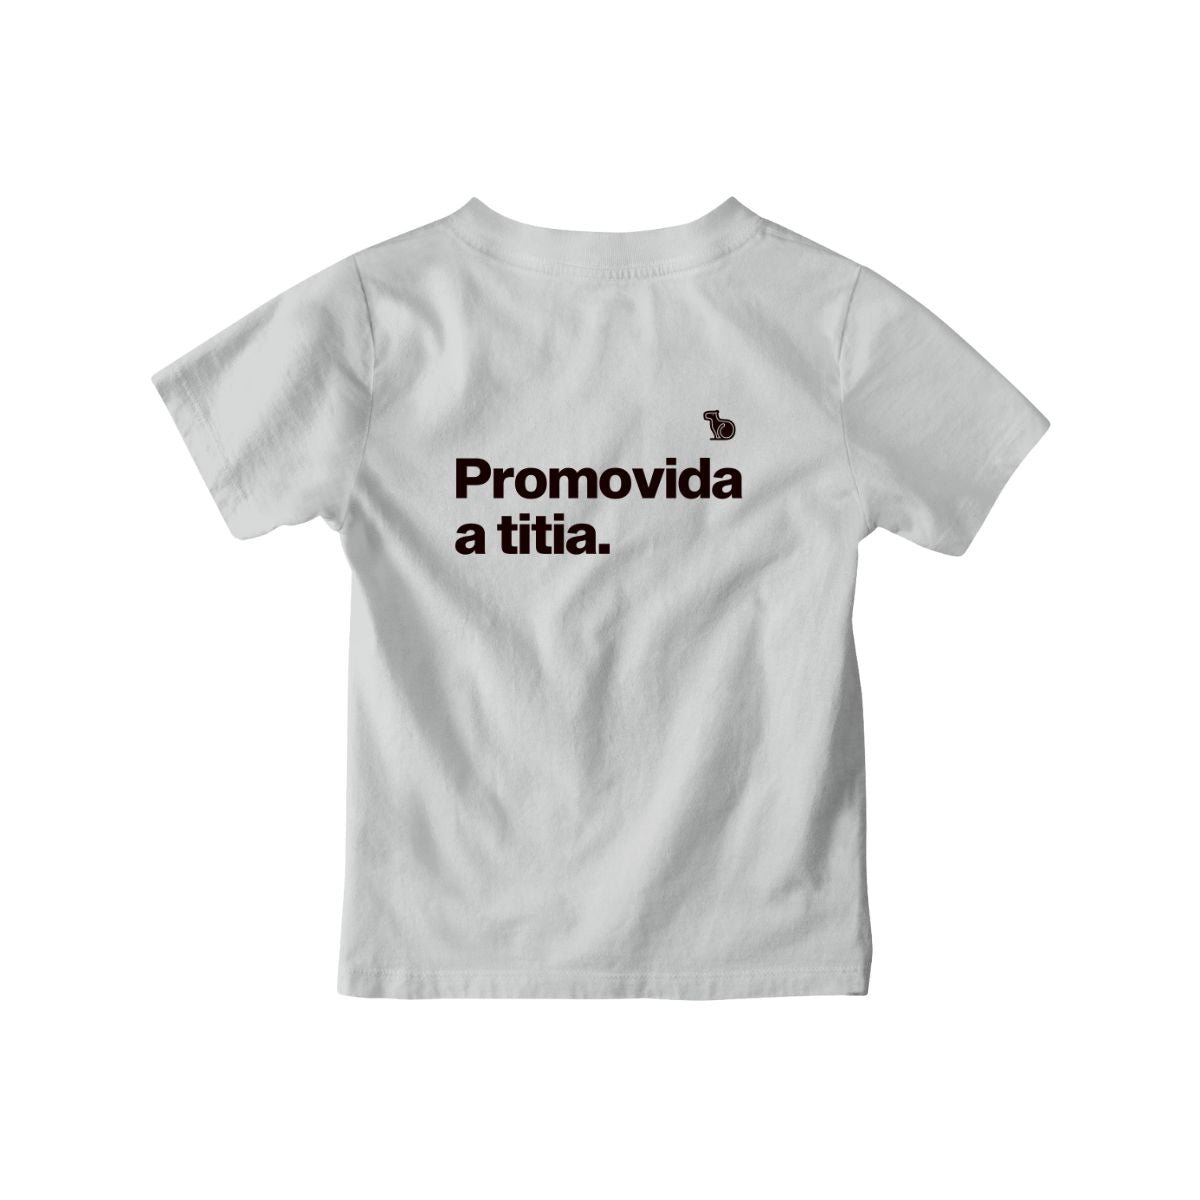 Camiseta infantil cinza com a frase "Promovida a titia."